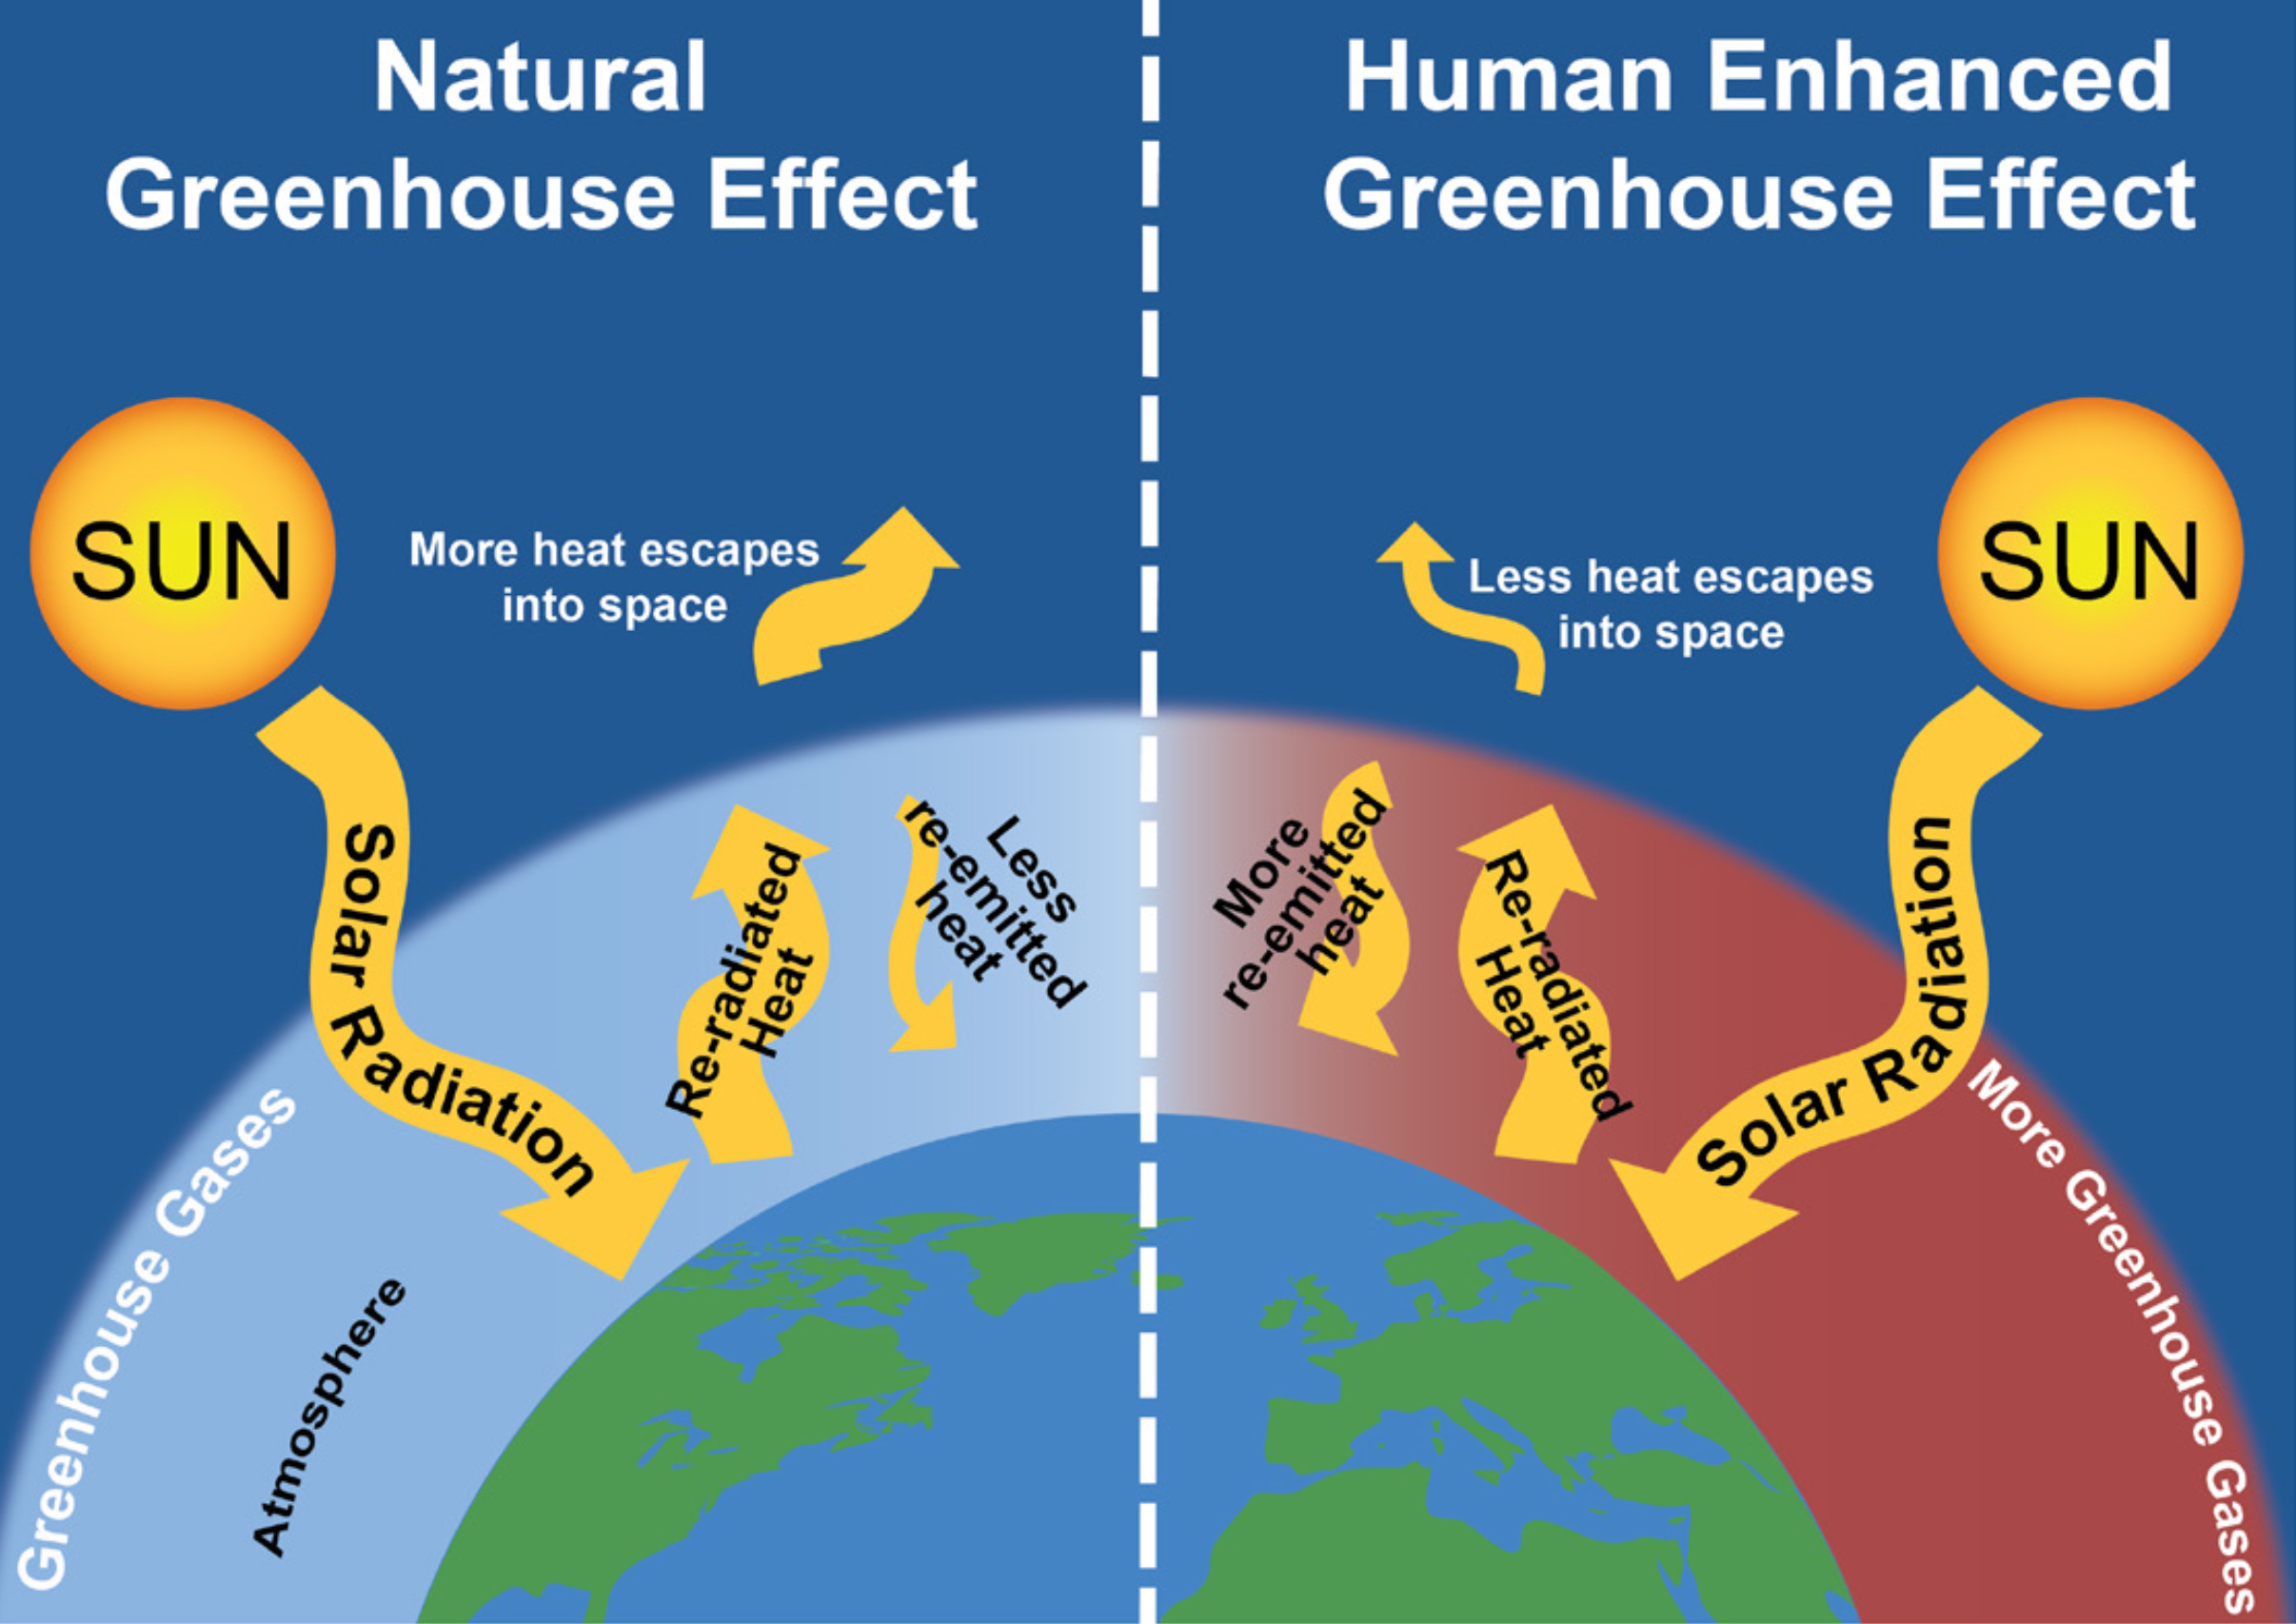 Human warm. Greenhouse Effect. Парниковый эффект и глобальное потепление. Greenhouse Effect and Global warming. Consequences of Global warming.